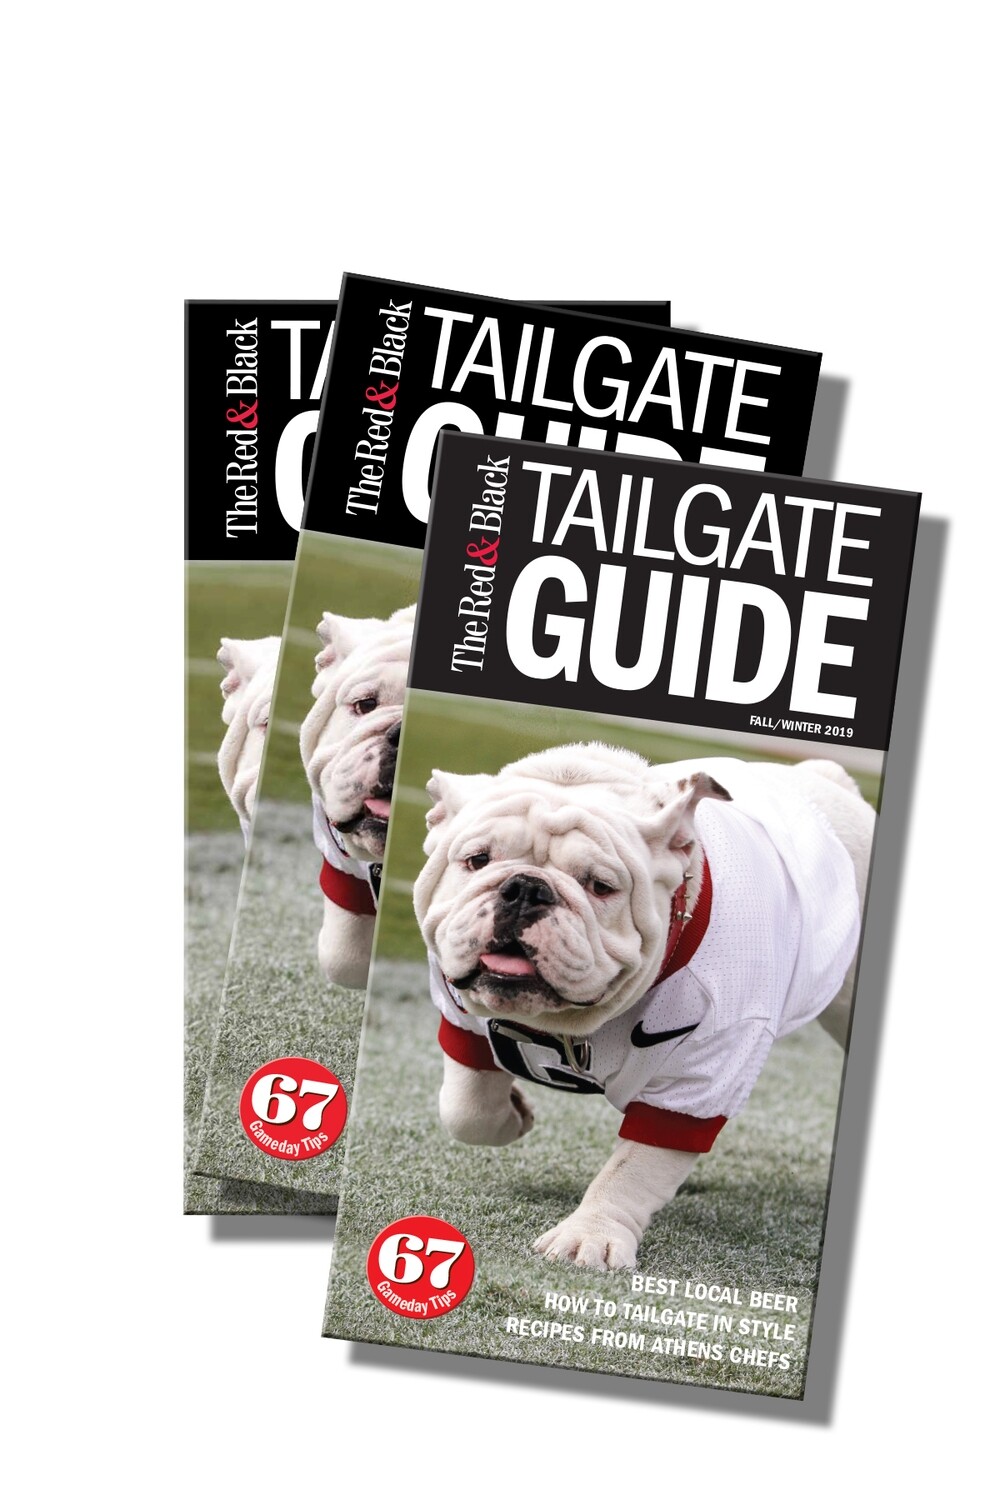 Tailgate Guide 2019